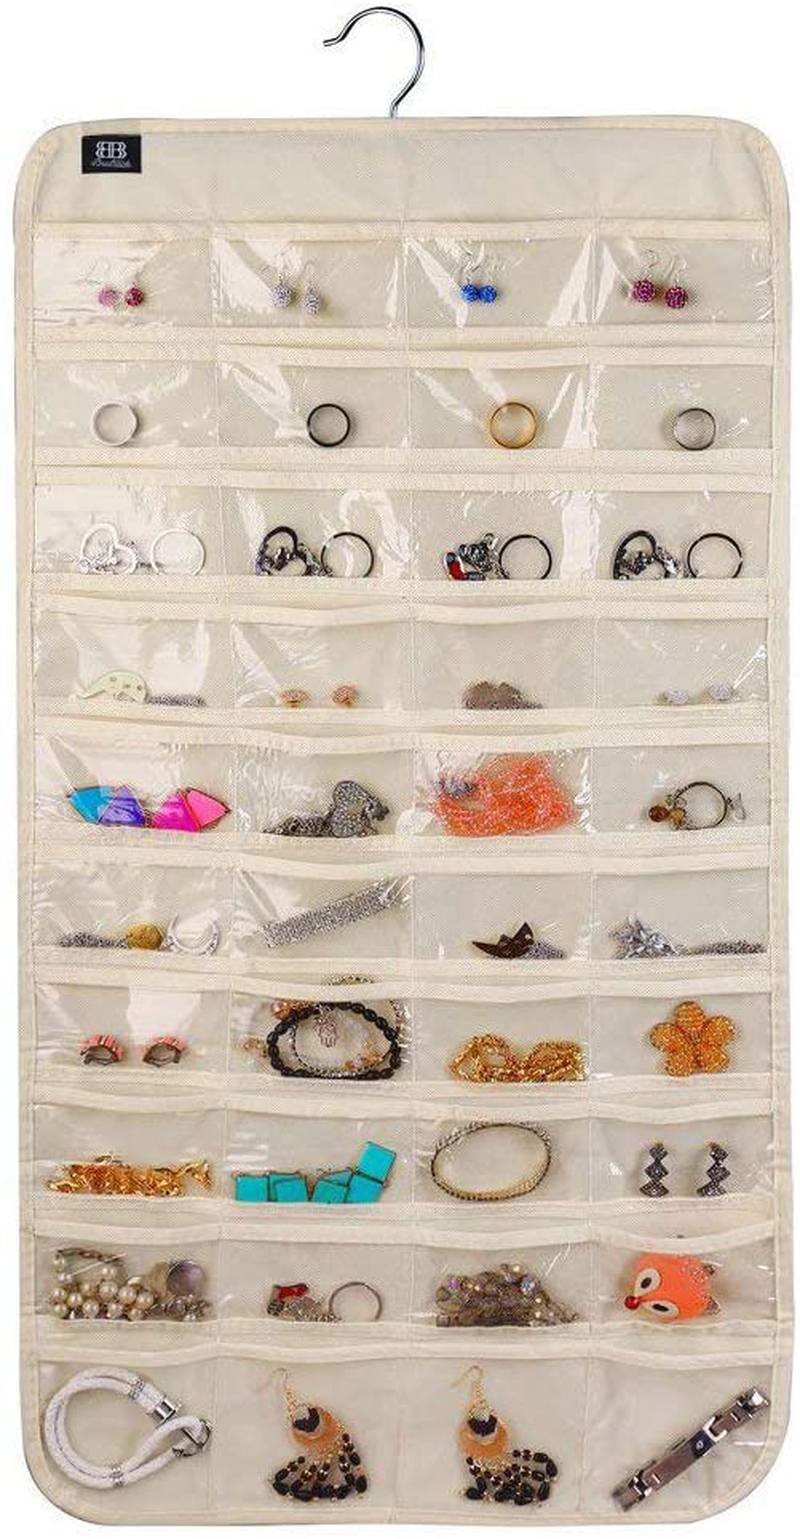 BB Brotrade Hanging Jewelry Organizer,Accessories Organizer,80 Pocket Organizer for Holding Jewelries (Pink)